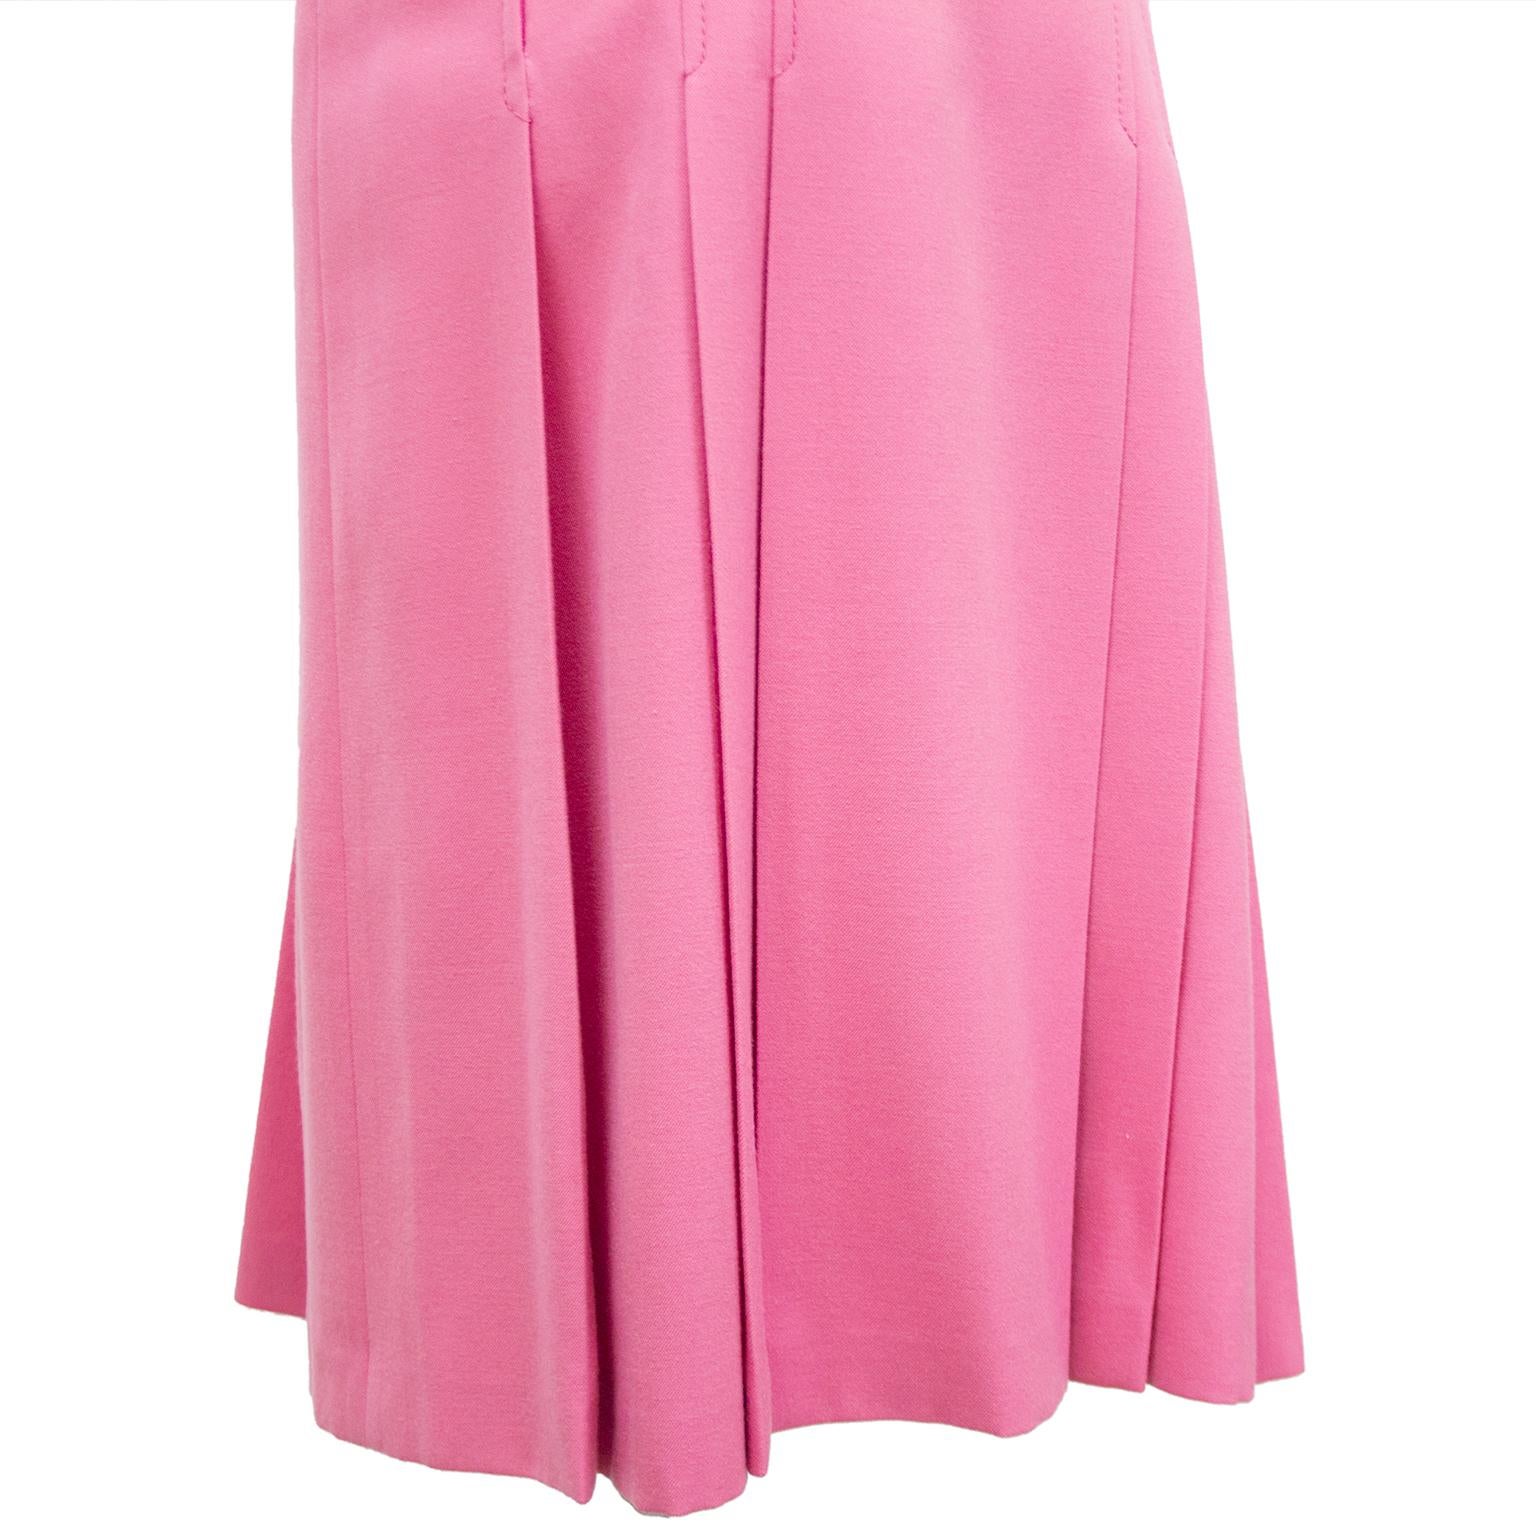 pink wool skirt